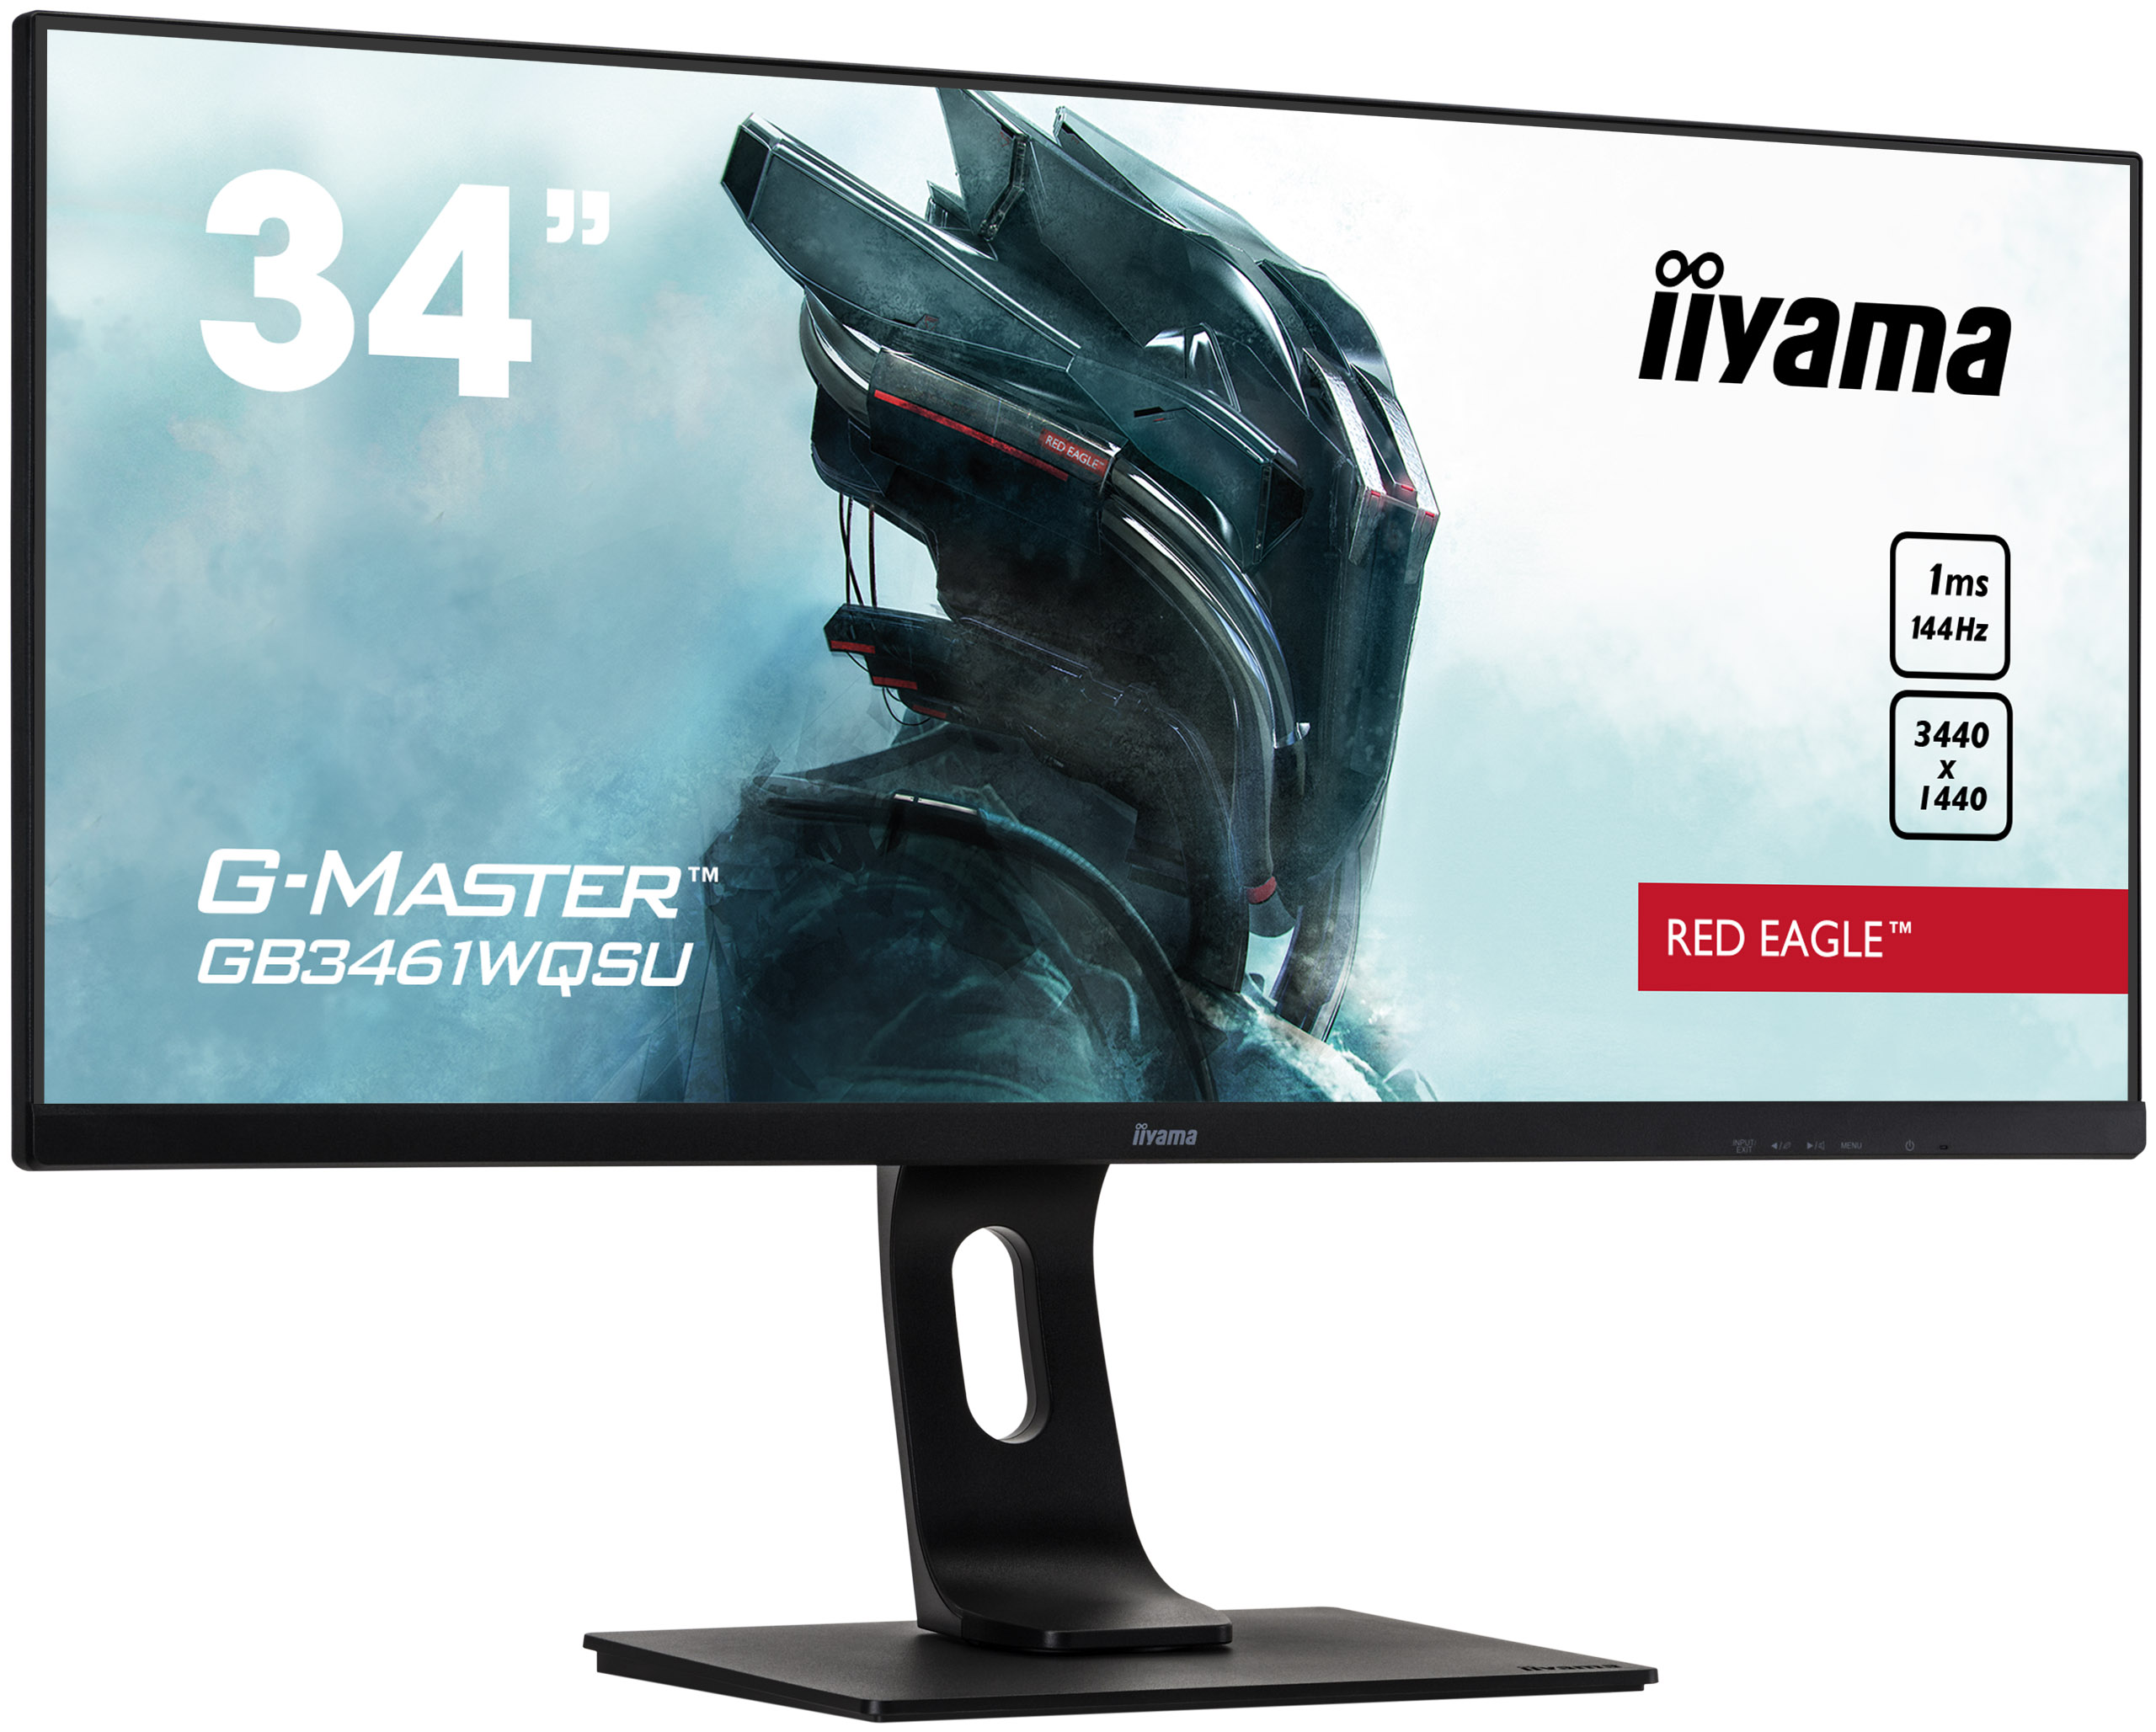 iiyama - G-Master GB3461WQSU-B1 Widen your vision with a GB3461WQSU Red  Eagle with FreeSync Premium